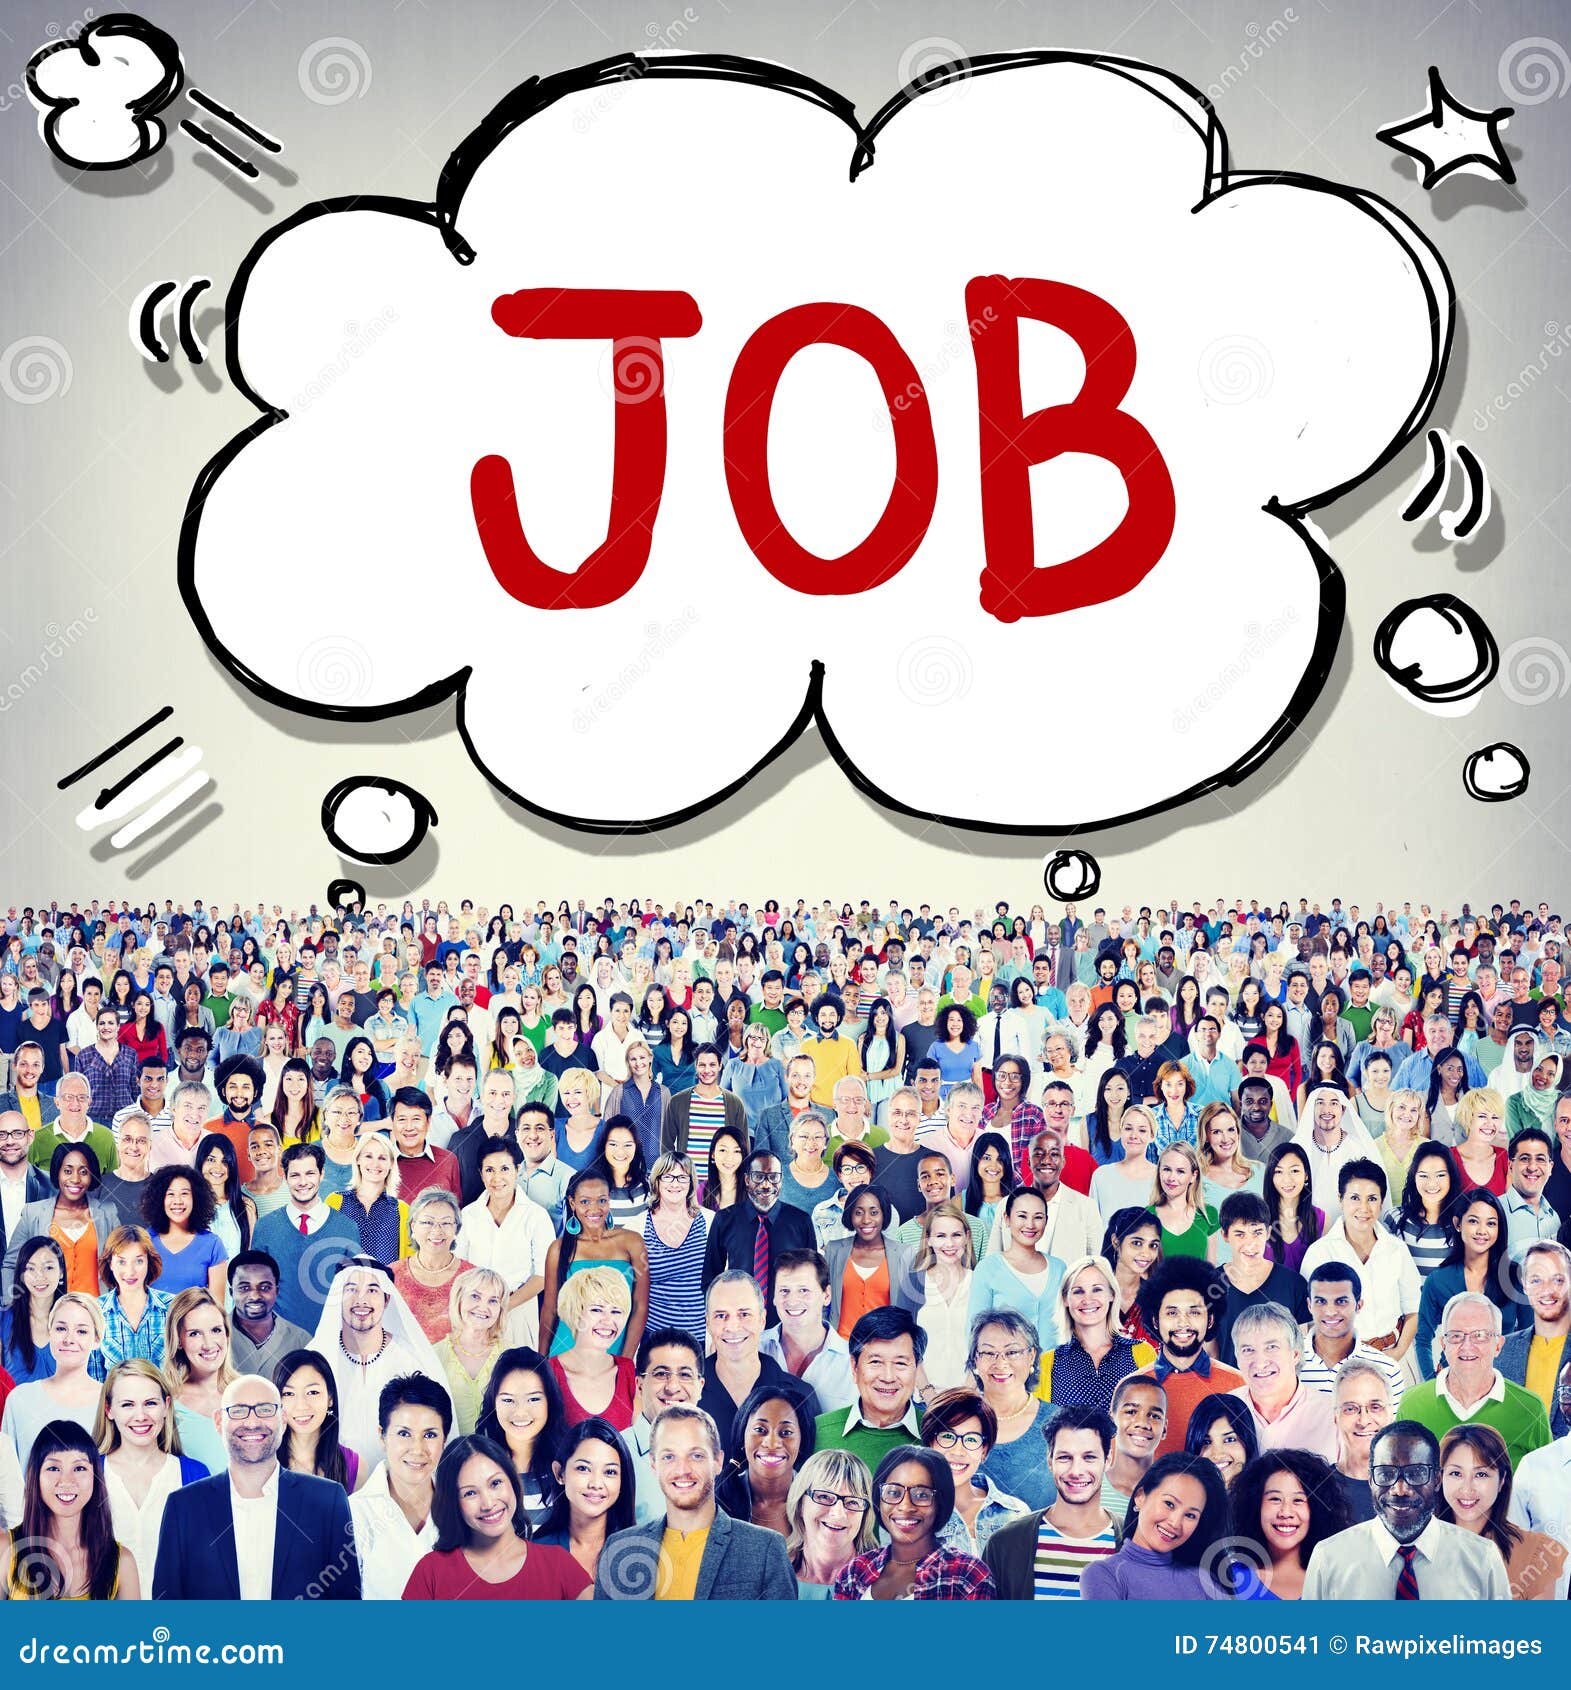 job employment career occupation goals concept